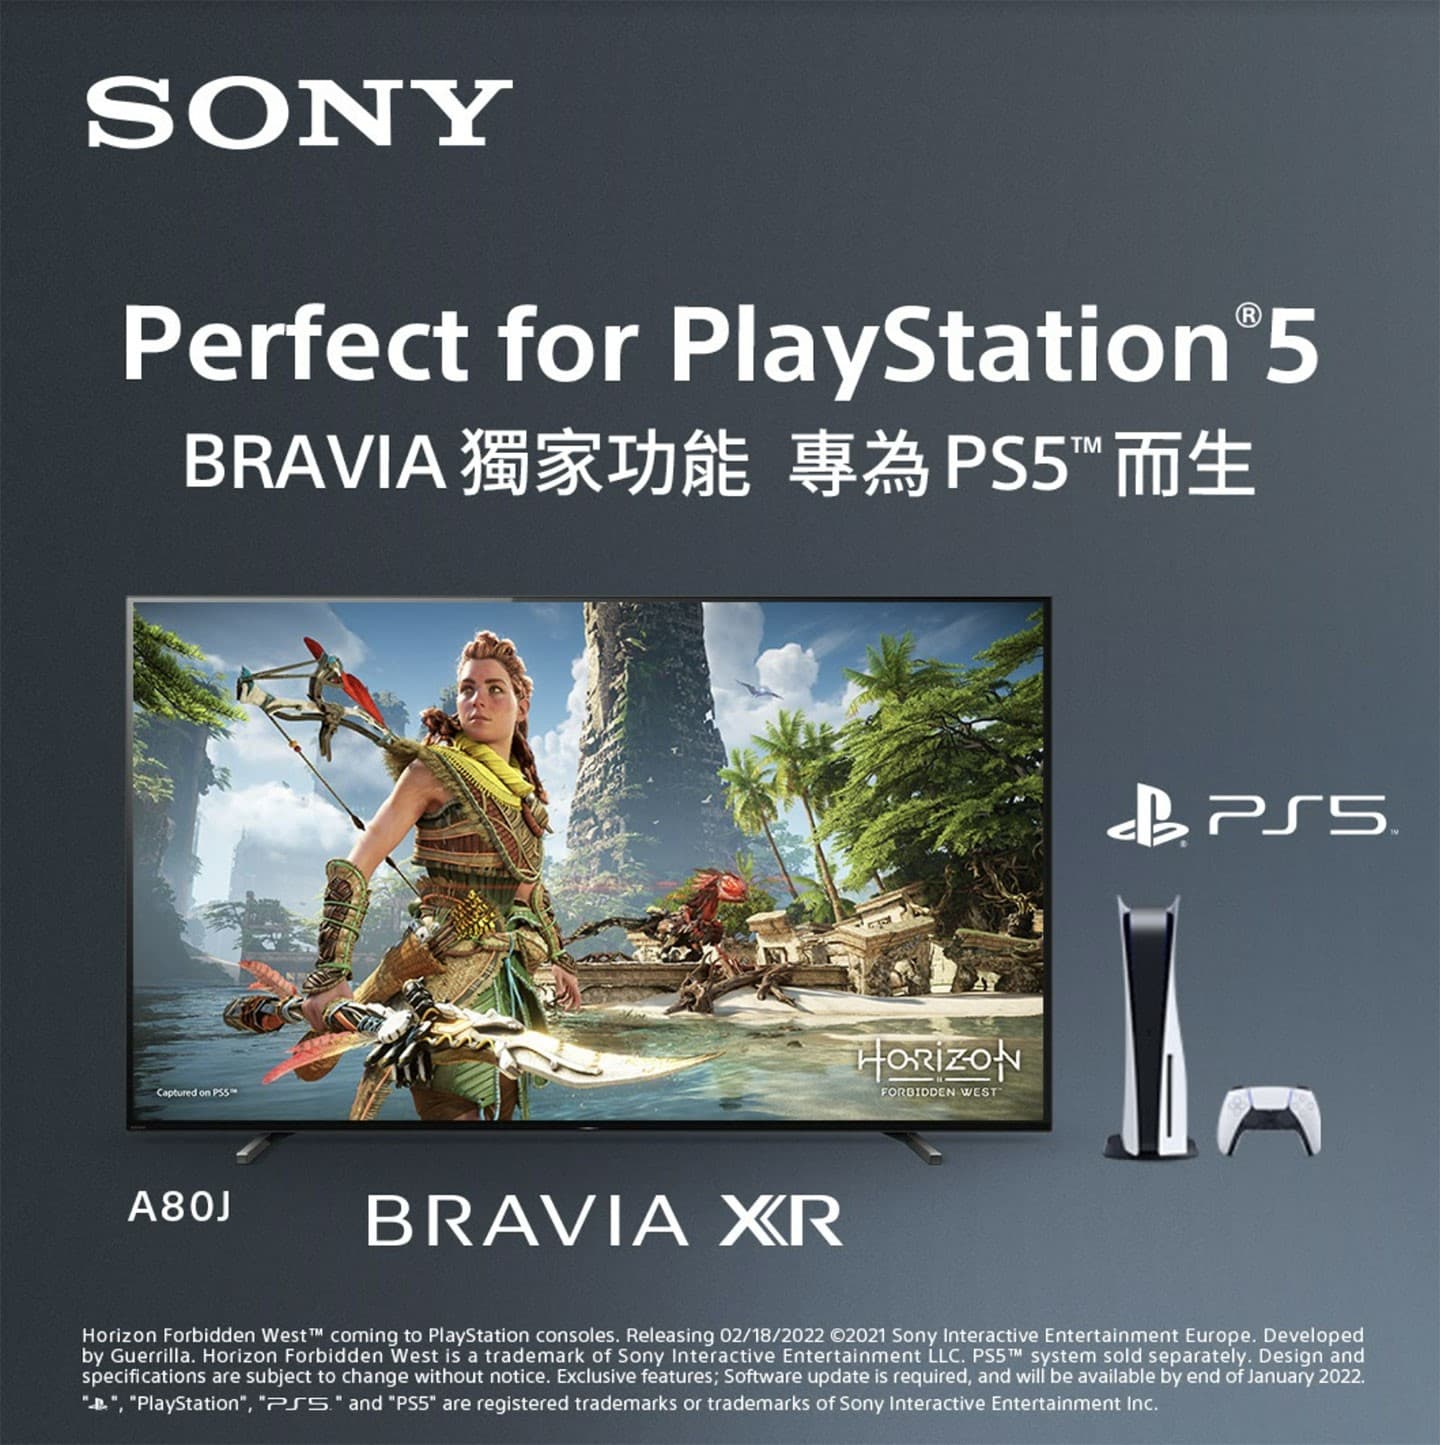 Sony BRAVIA 繼去年推出「Ready for PlayStation 5」系列產品後，今年的 BRAVIA XR 也將透過更新進階成為「Perfect for PlayStation 5」的 PS5 主機配最佳化顯示器。